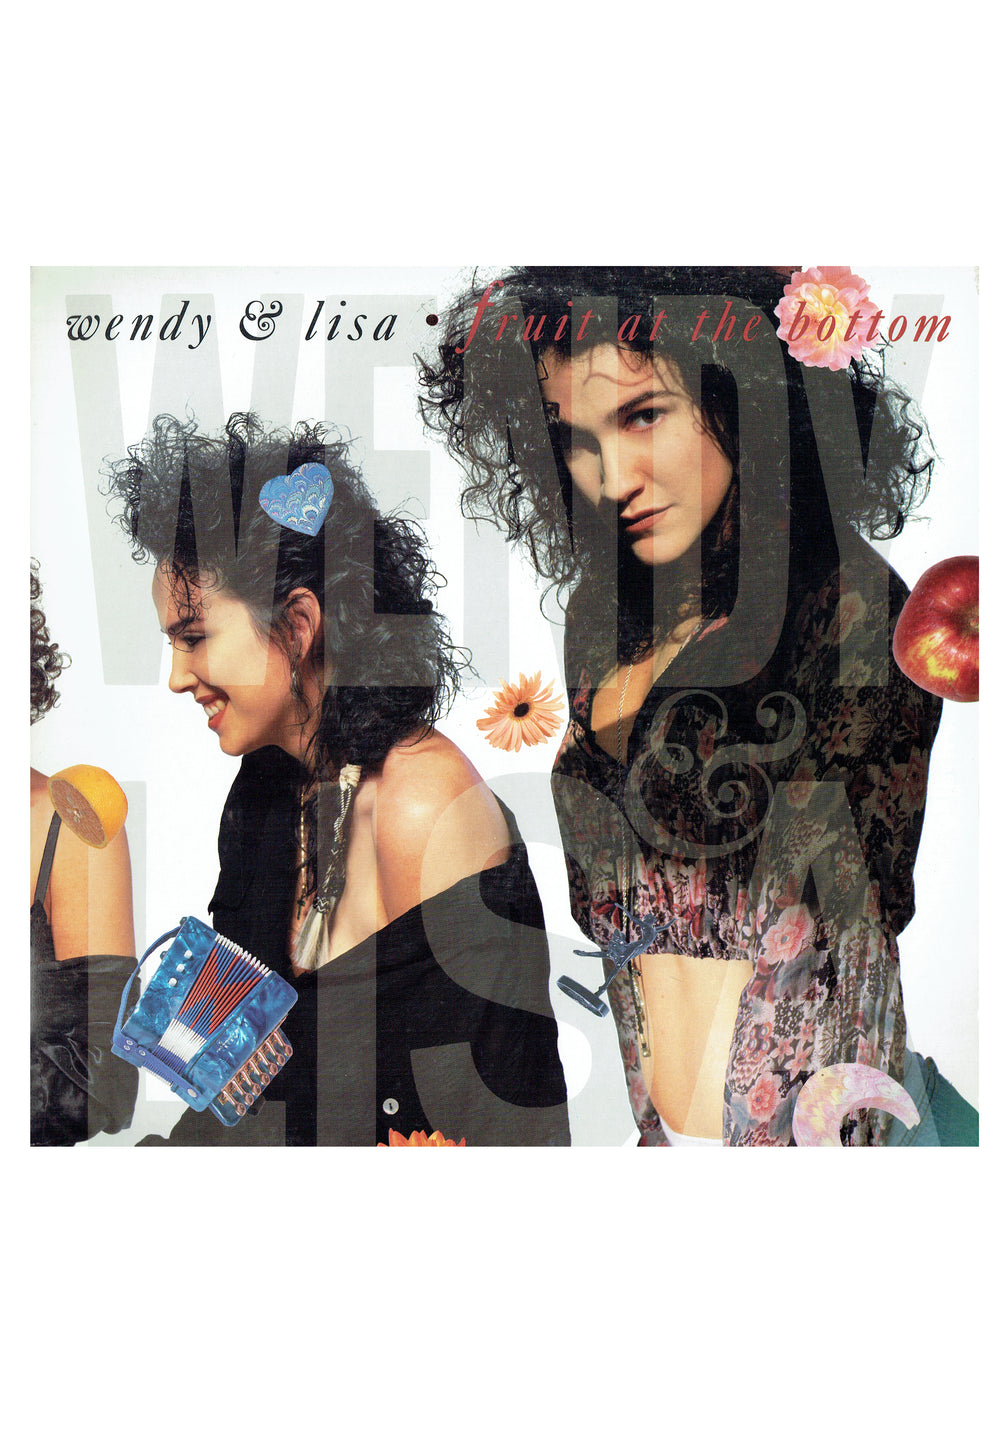 Wendy & Lisa Fruit At The Bottom Vinyl Album UK 1989 Prince V2580